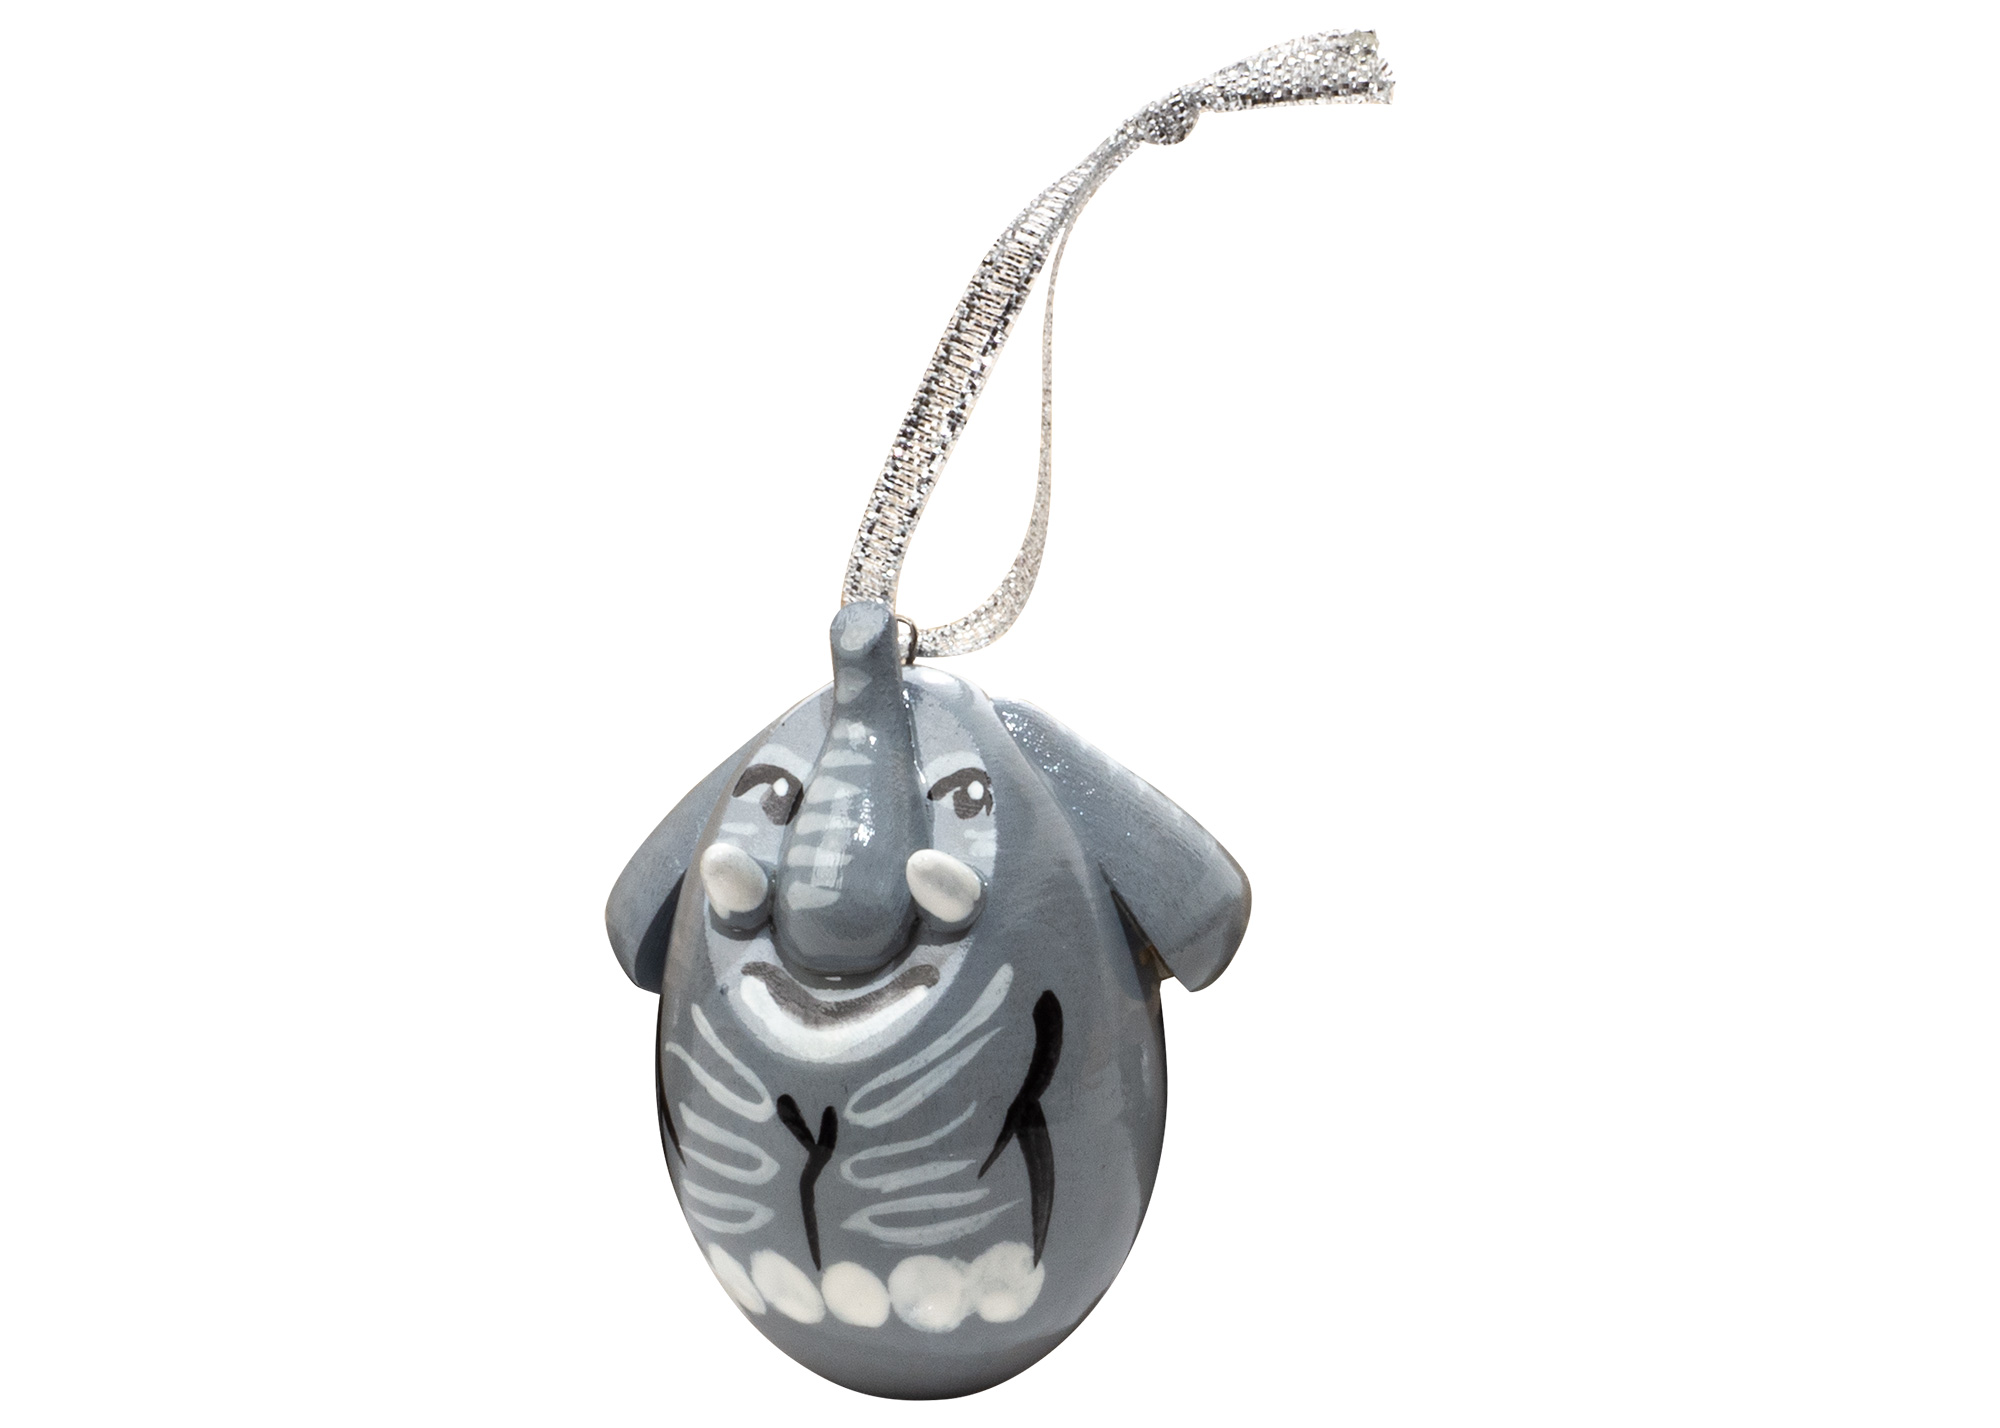 Buy Elephant Ornament 2" at GoldenCockerel.com